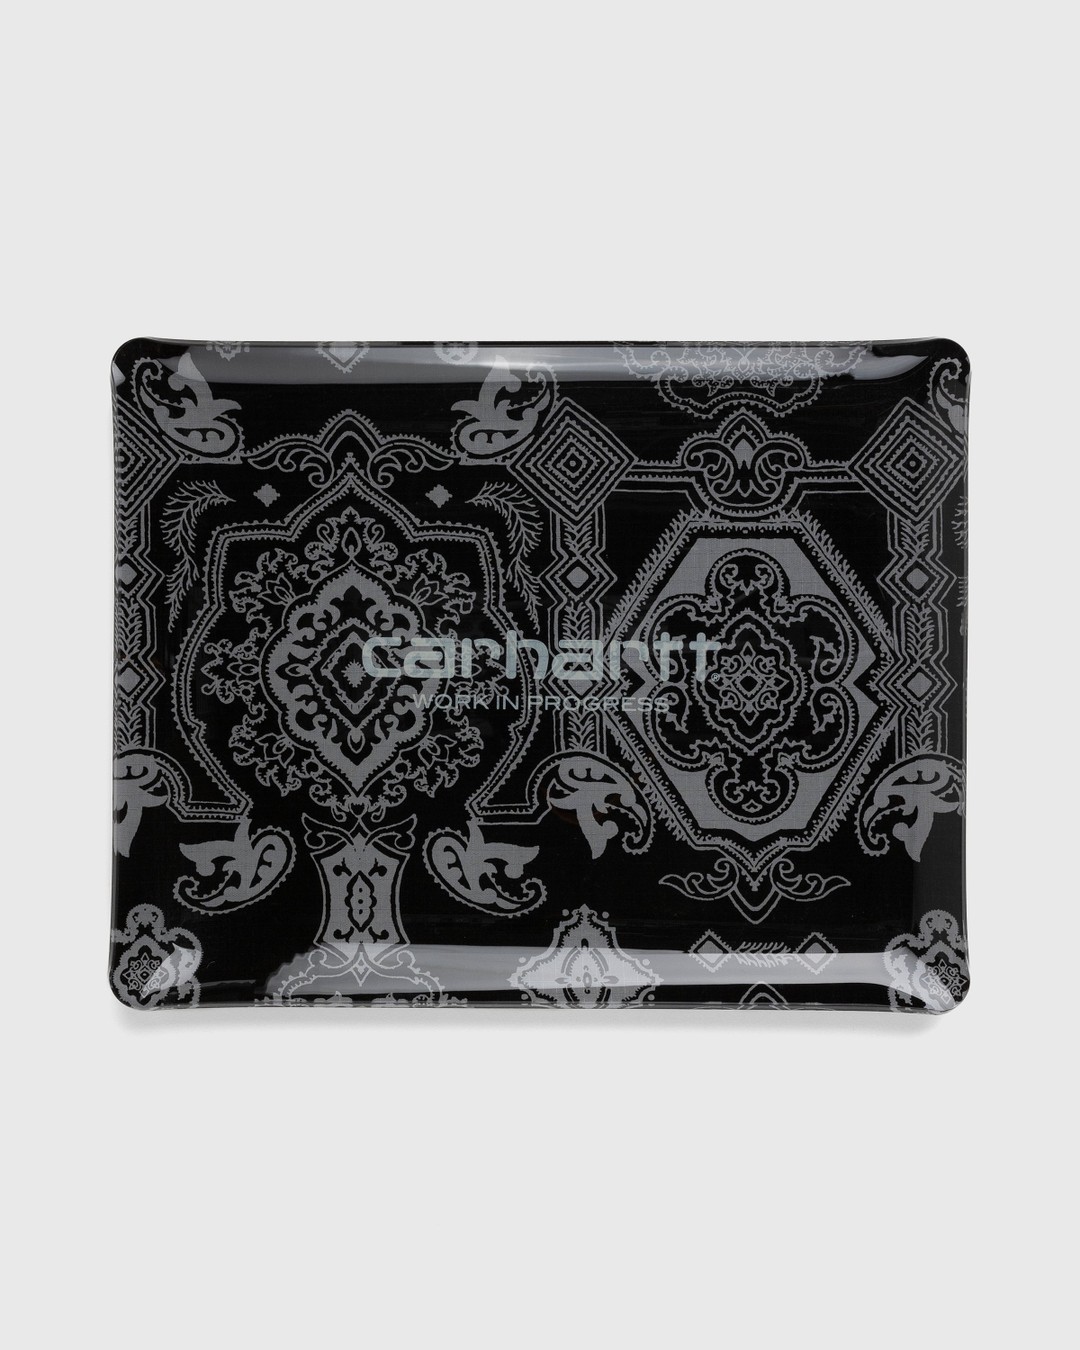 Carhartt WIP – Verse Fabric Tray Black - Ceramics - Black - Image 1